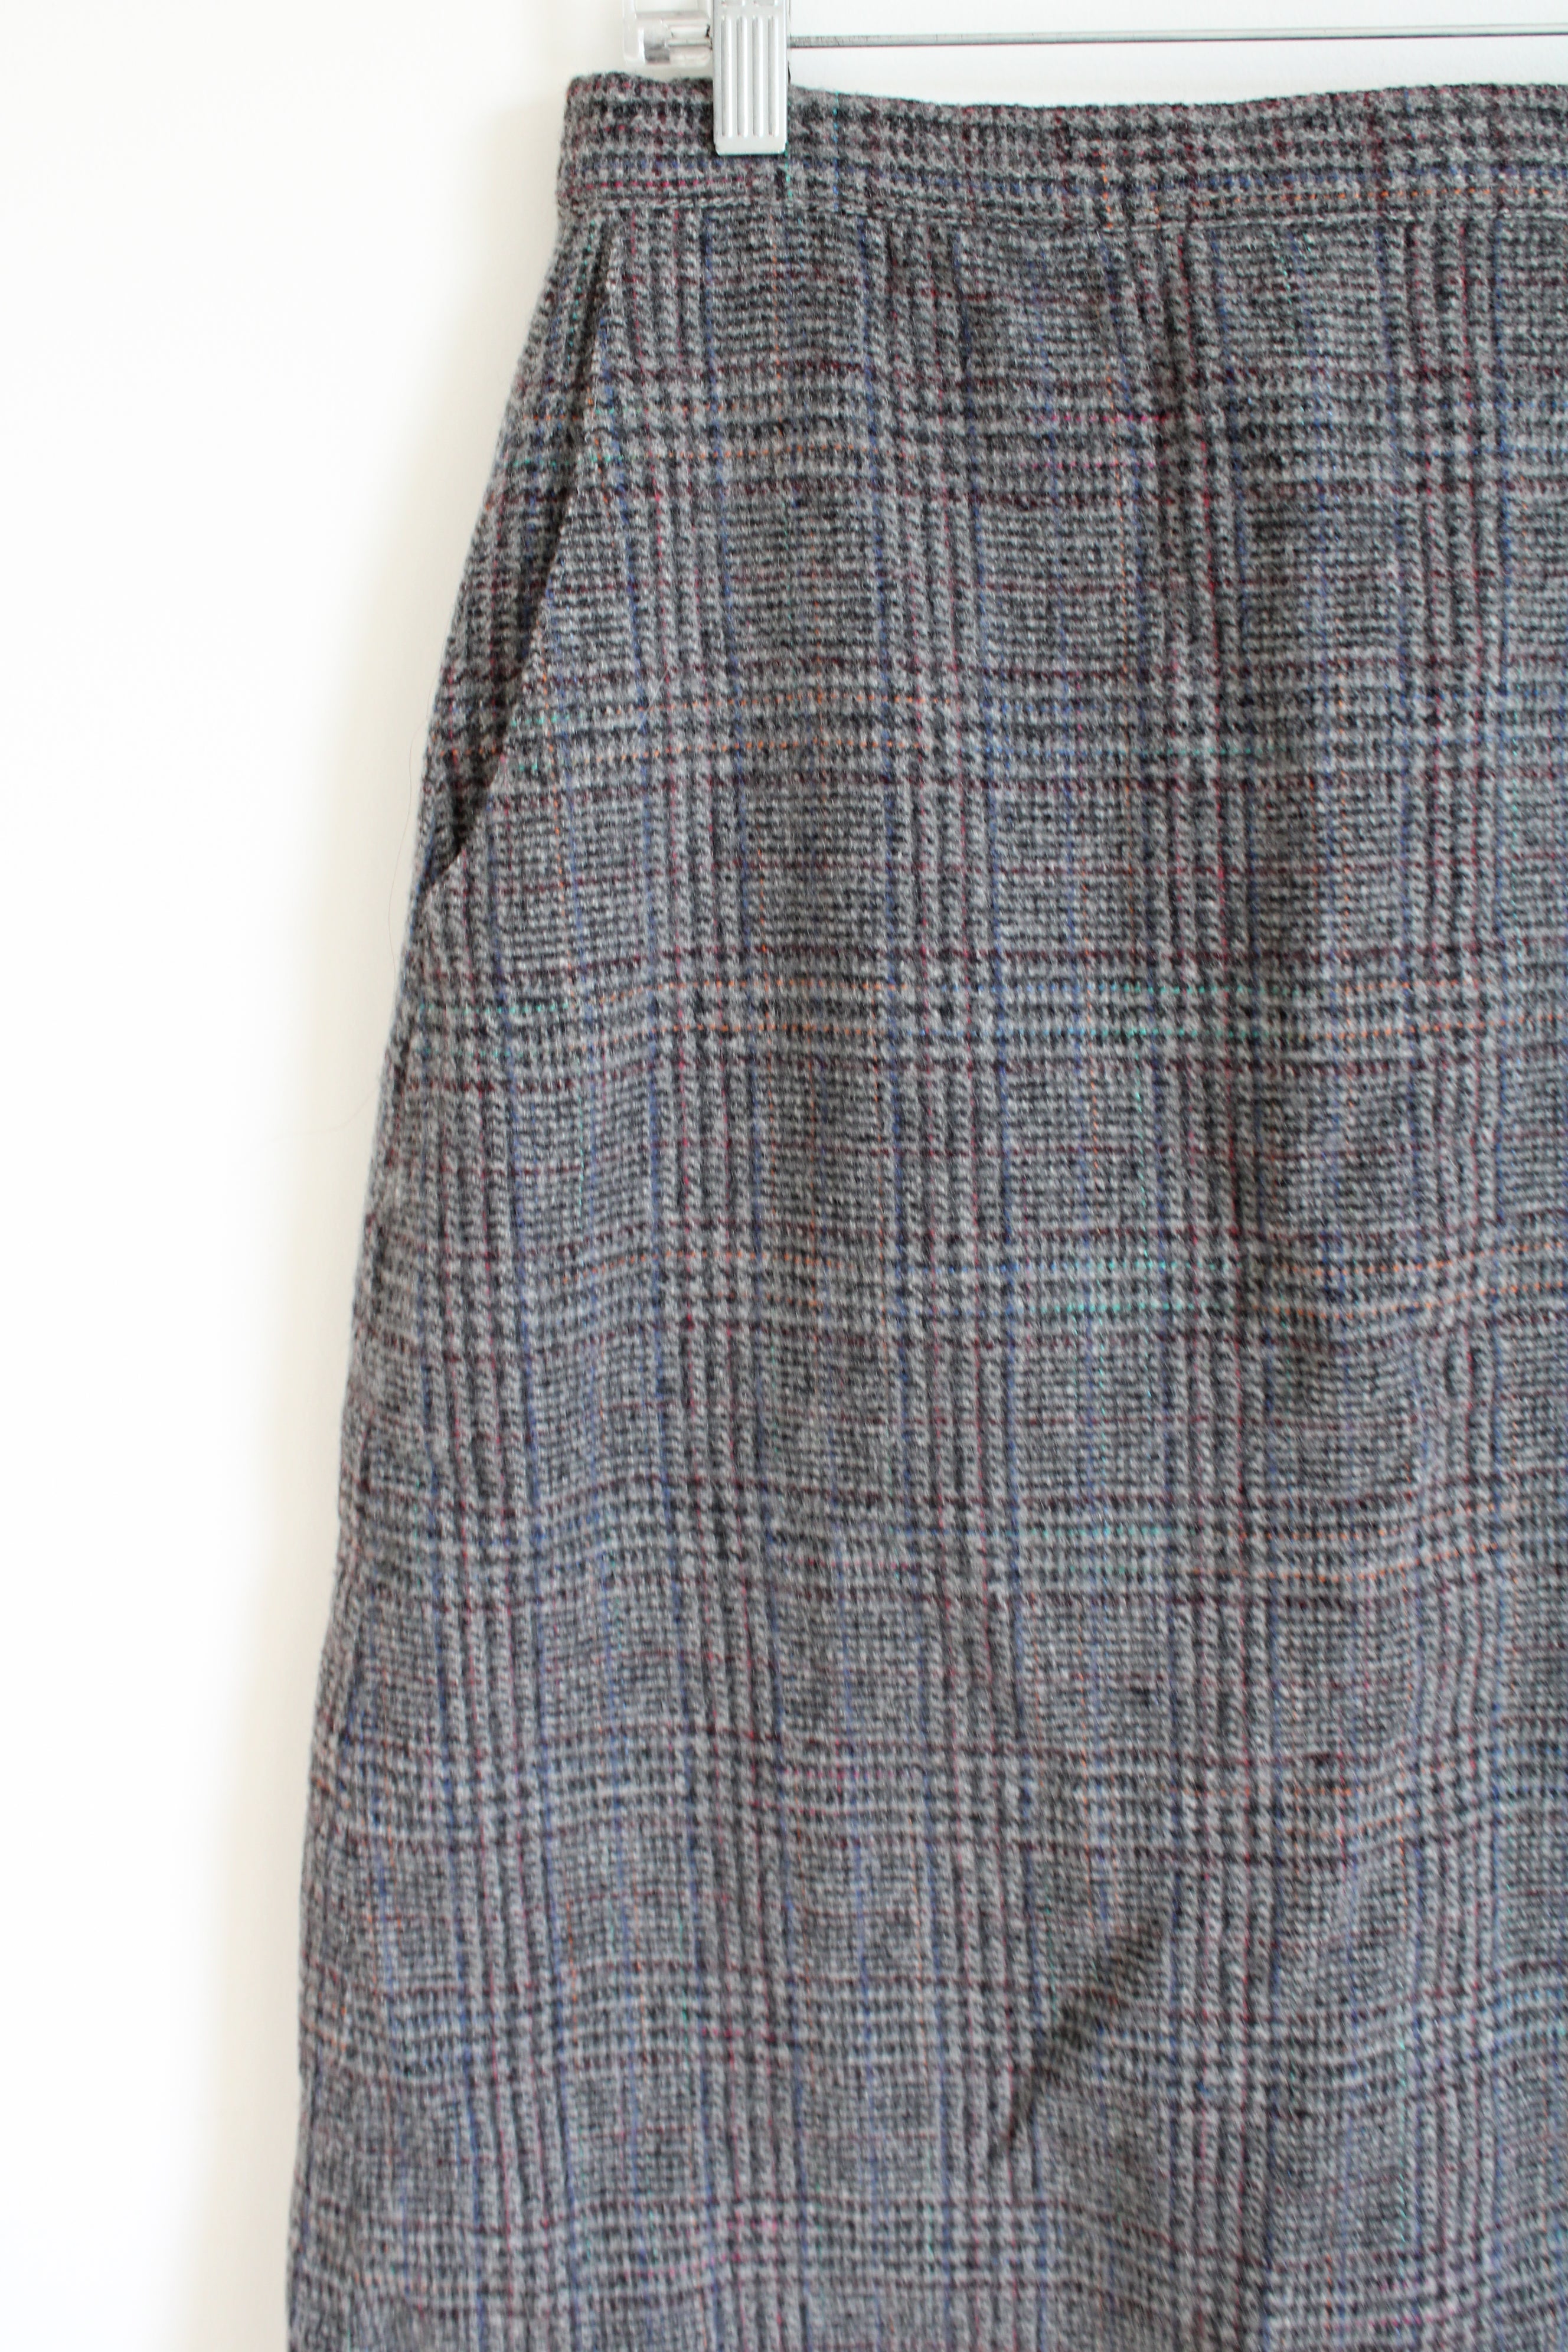 L.L. Bean Vintage Gray Plaid Skirt | 16 Petite